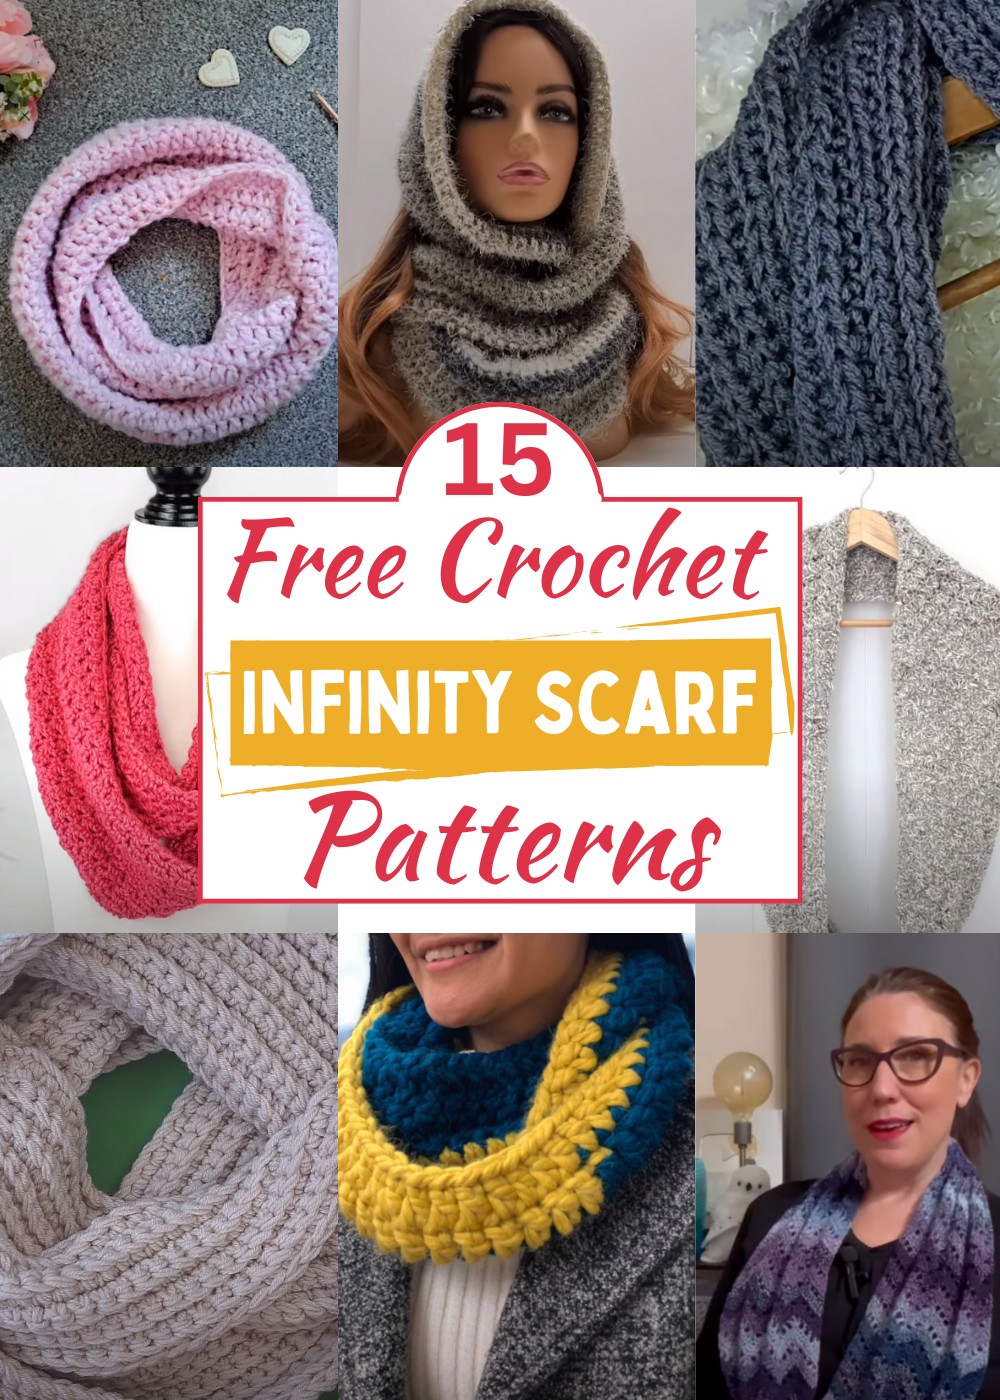 Crochet Infinity Scarf Patterns